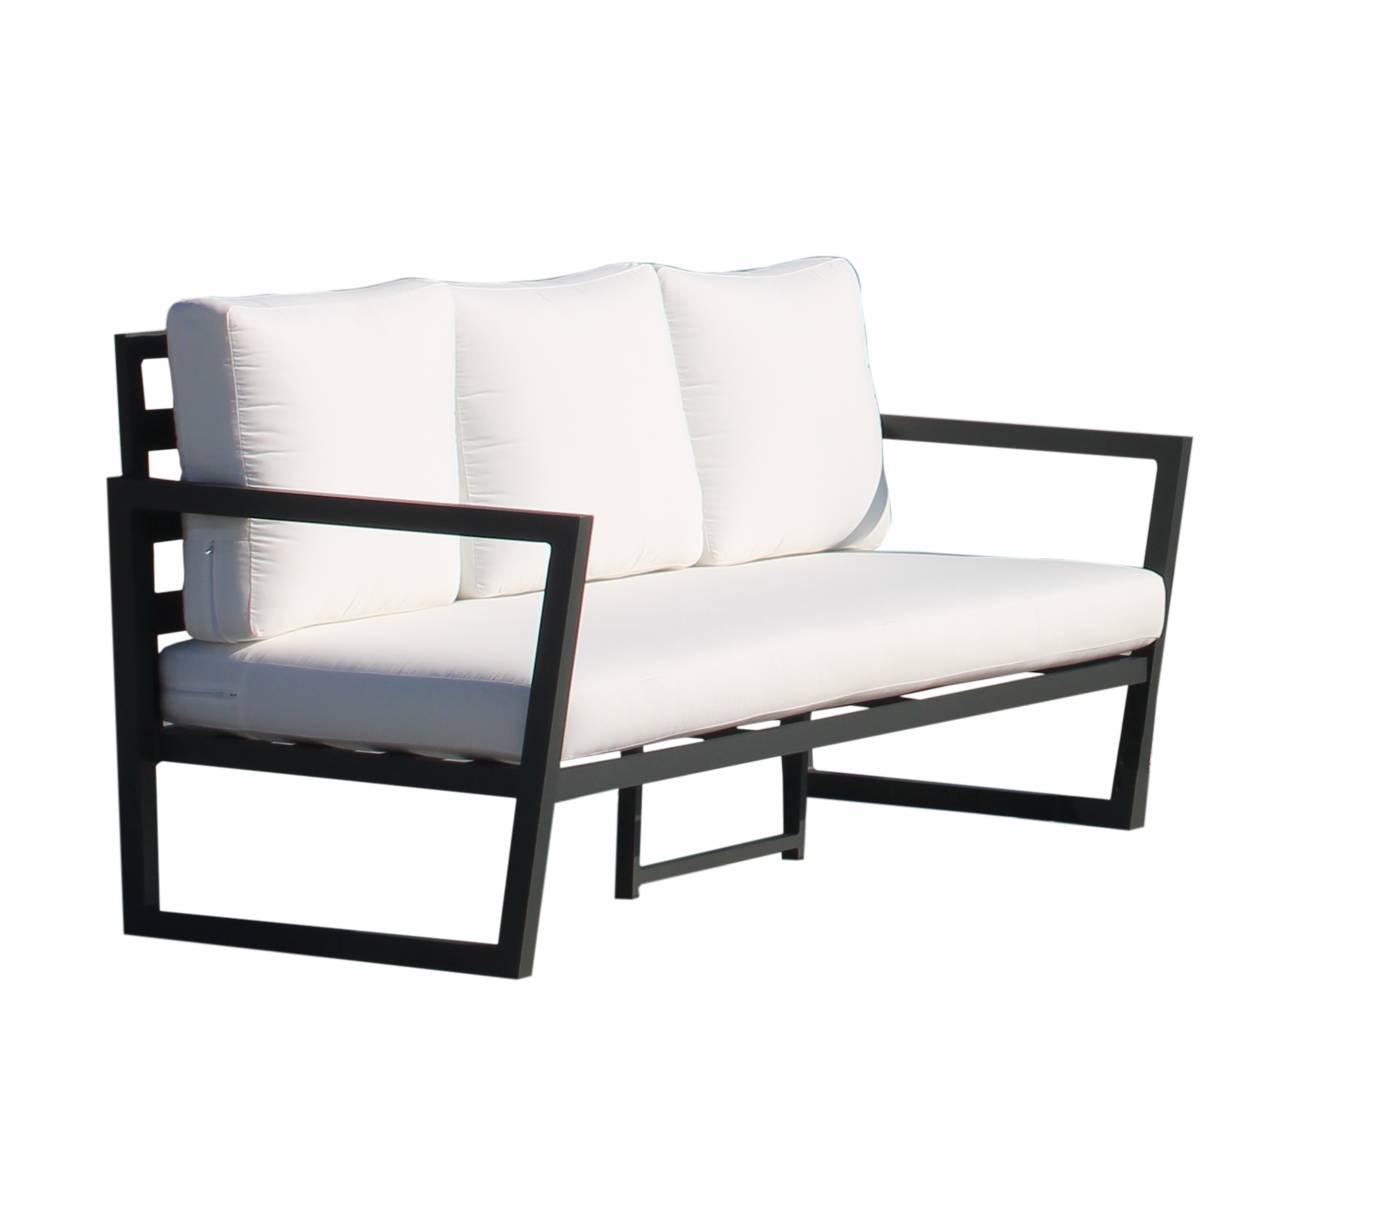 Sofá relax 3 plazas de aluminio para exterior. Disponible en color blanco, antracita, champagne, plata o marrón.